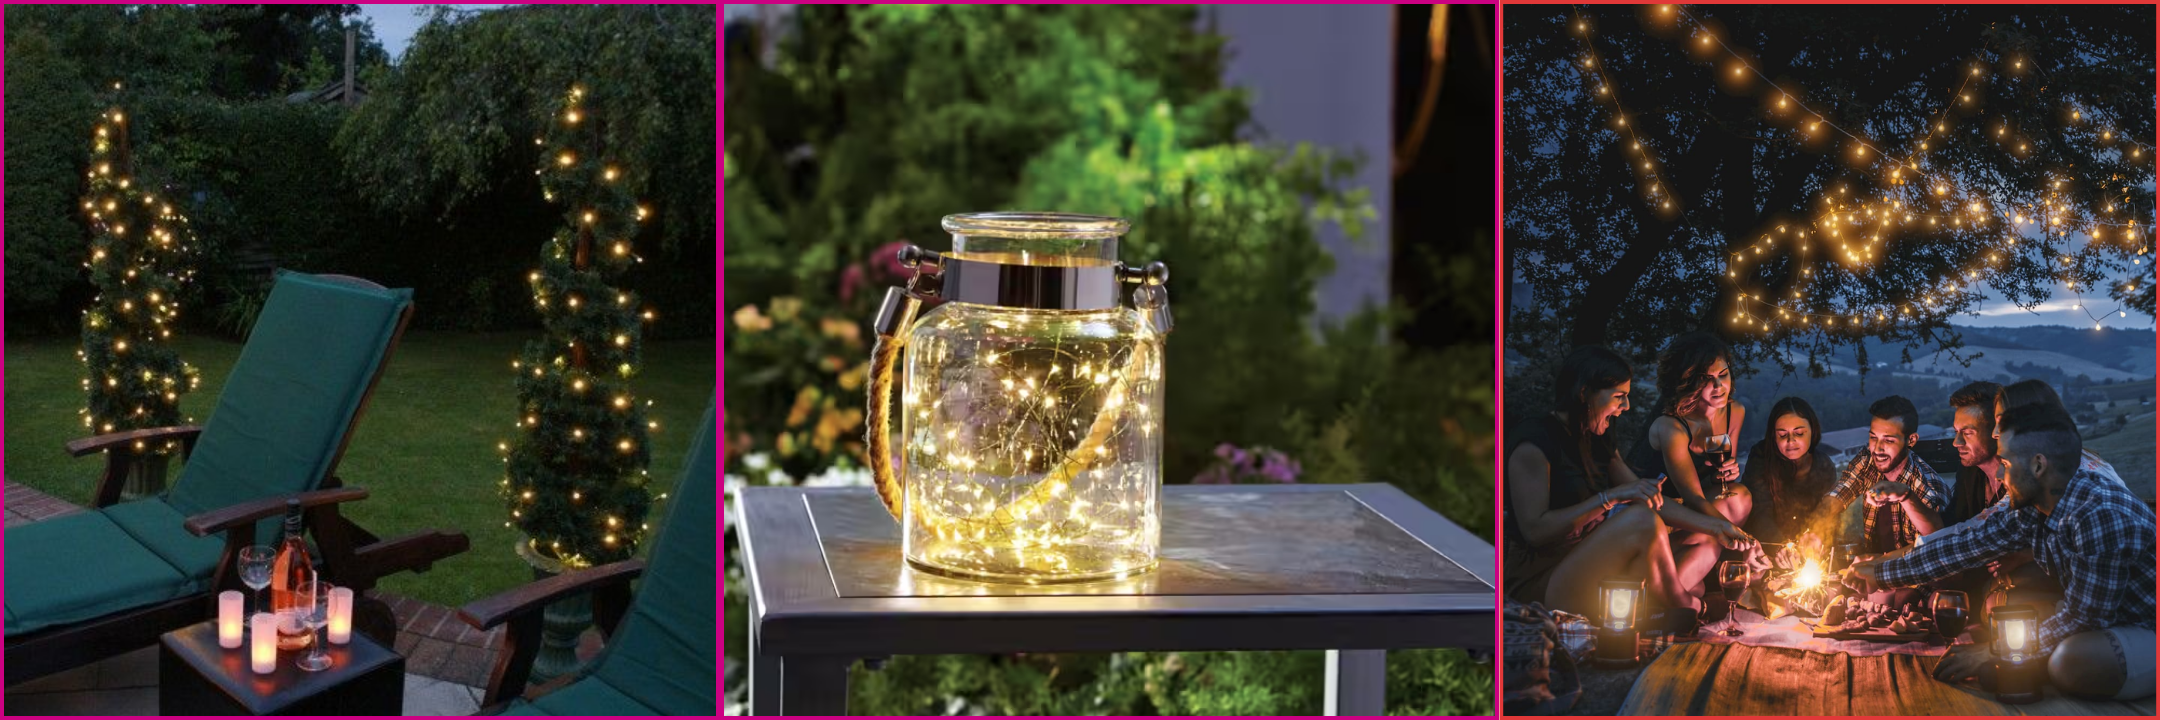 Cork Diwali LED Light for home decoration, for outdoor decoration